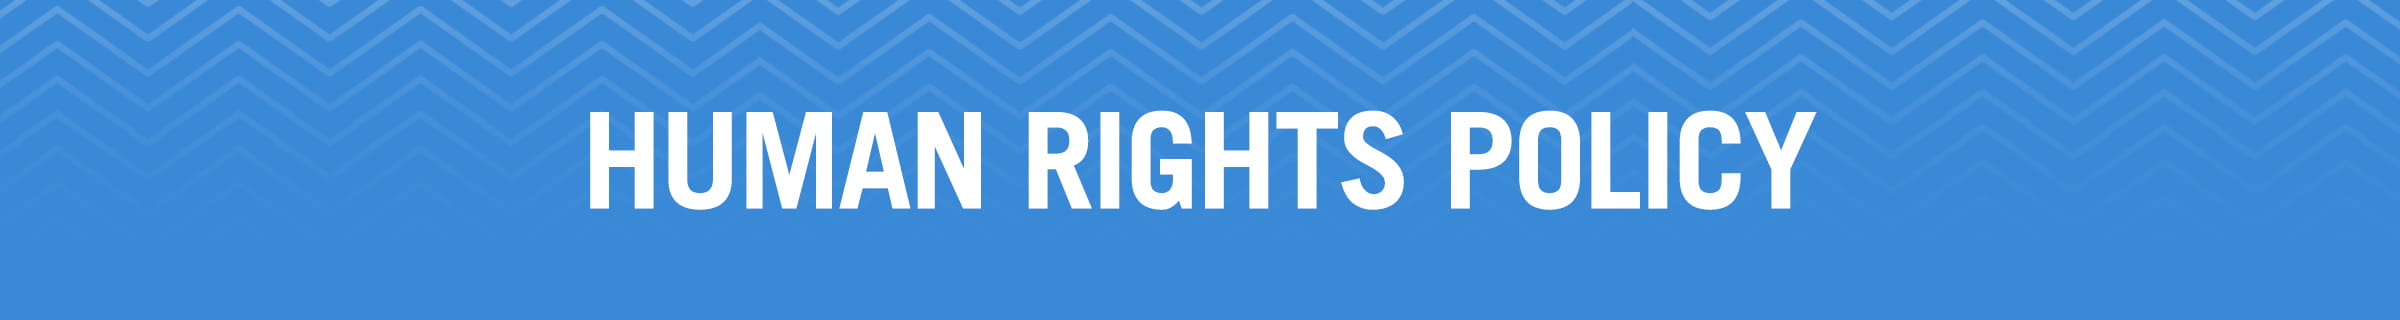 McCormick & Company Human Rights Policy